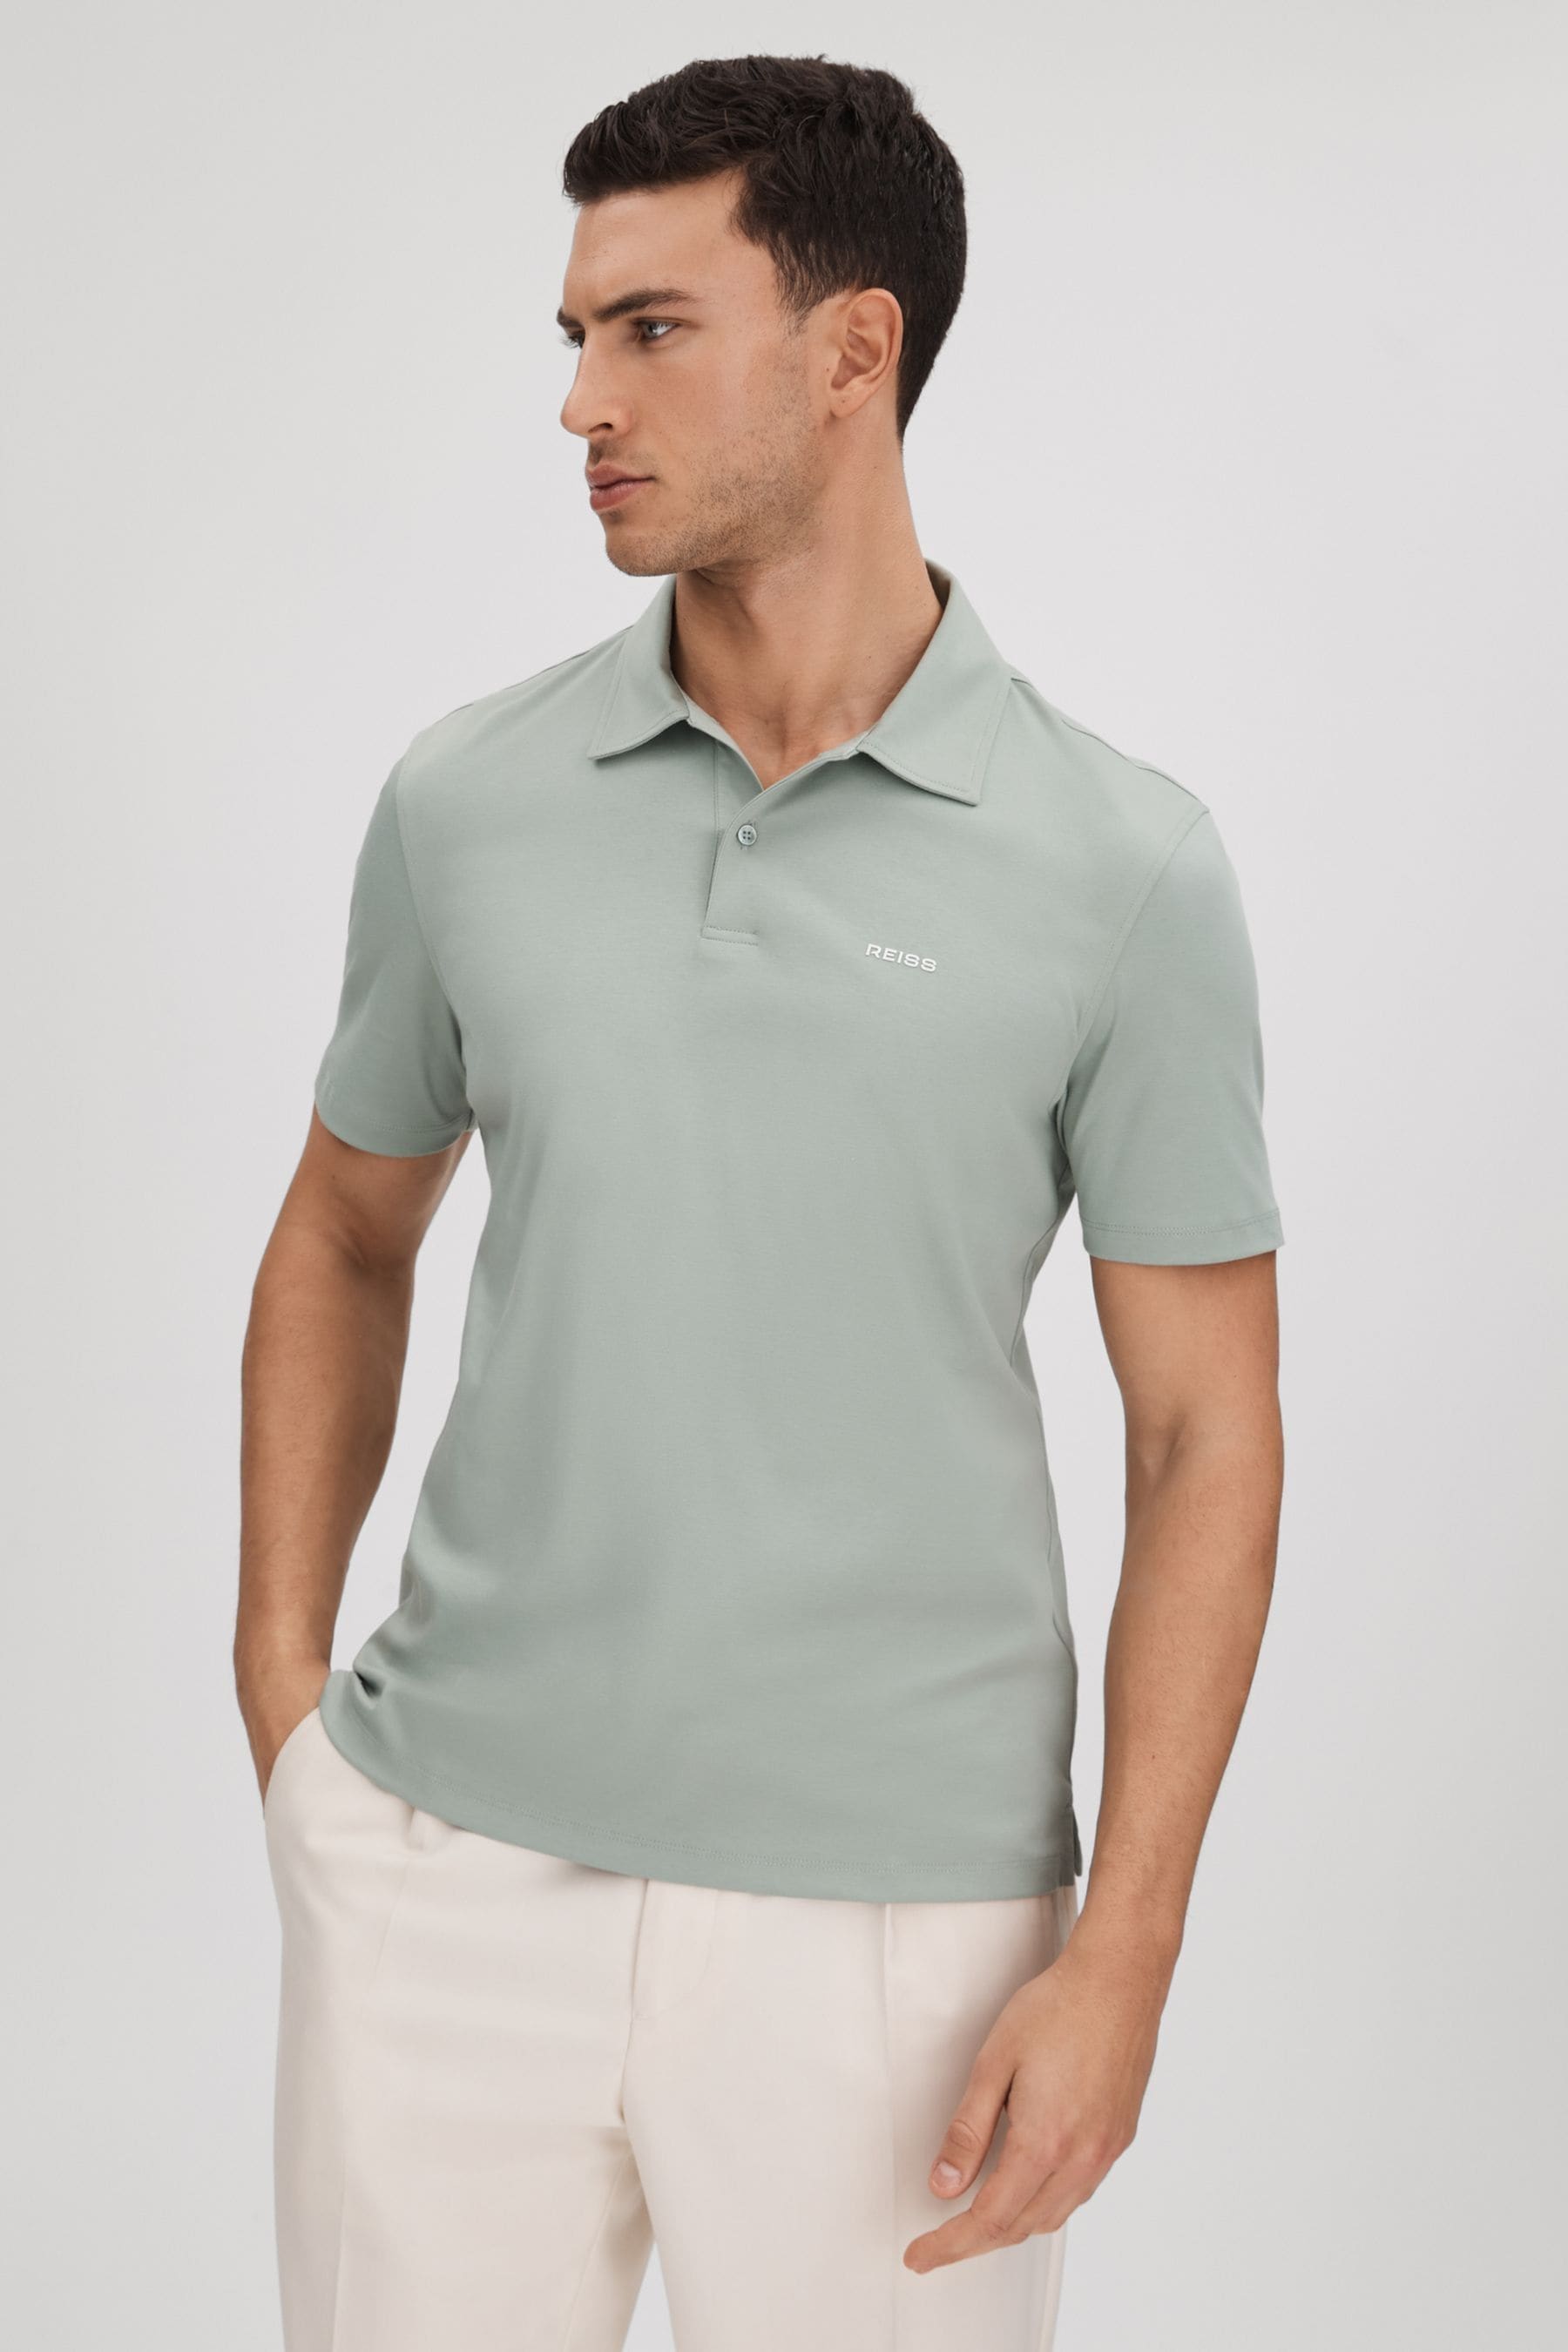 Reiss Owens - Sage Slim Fit Cotton Polo Shirt, S